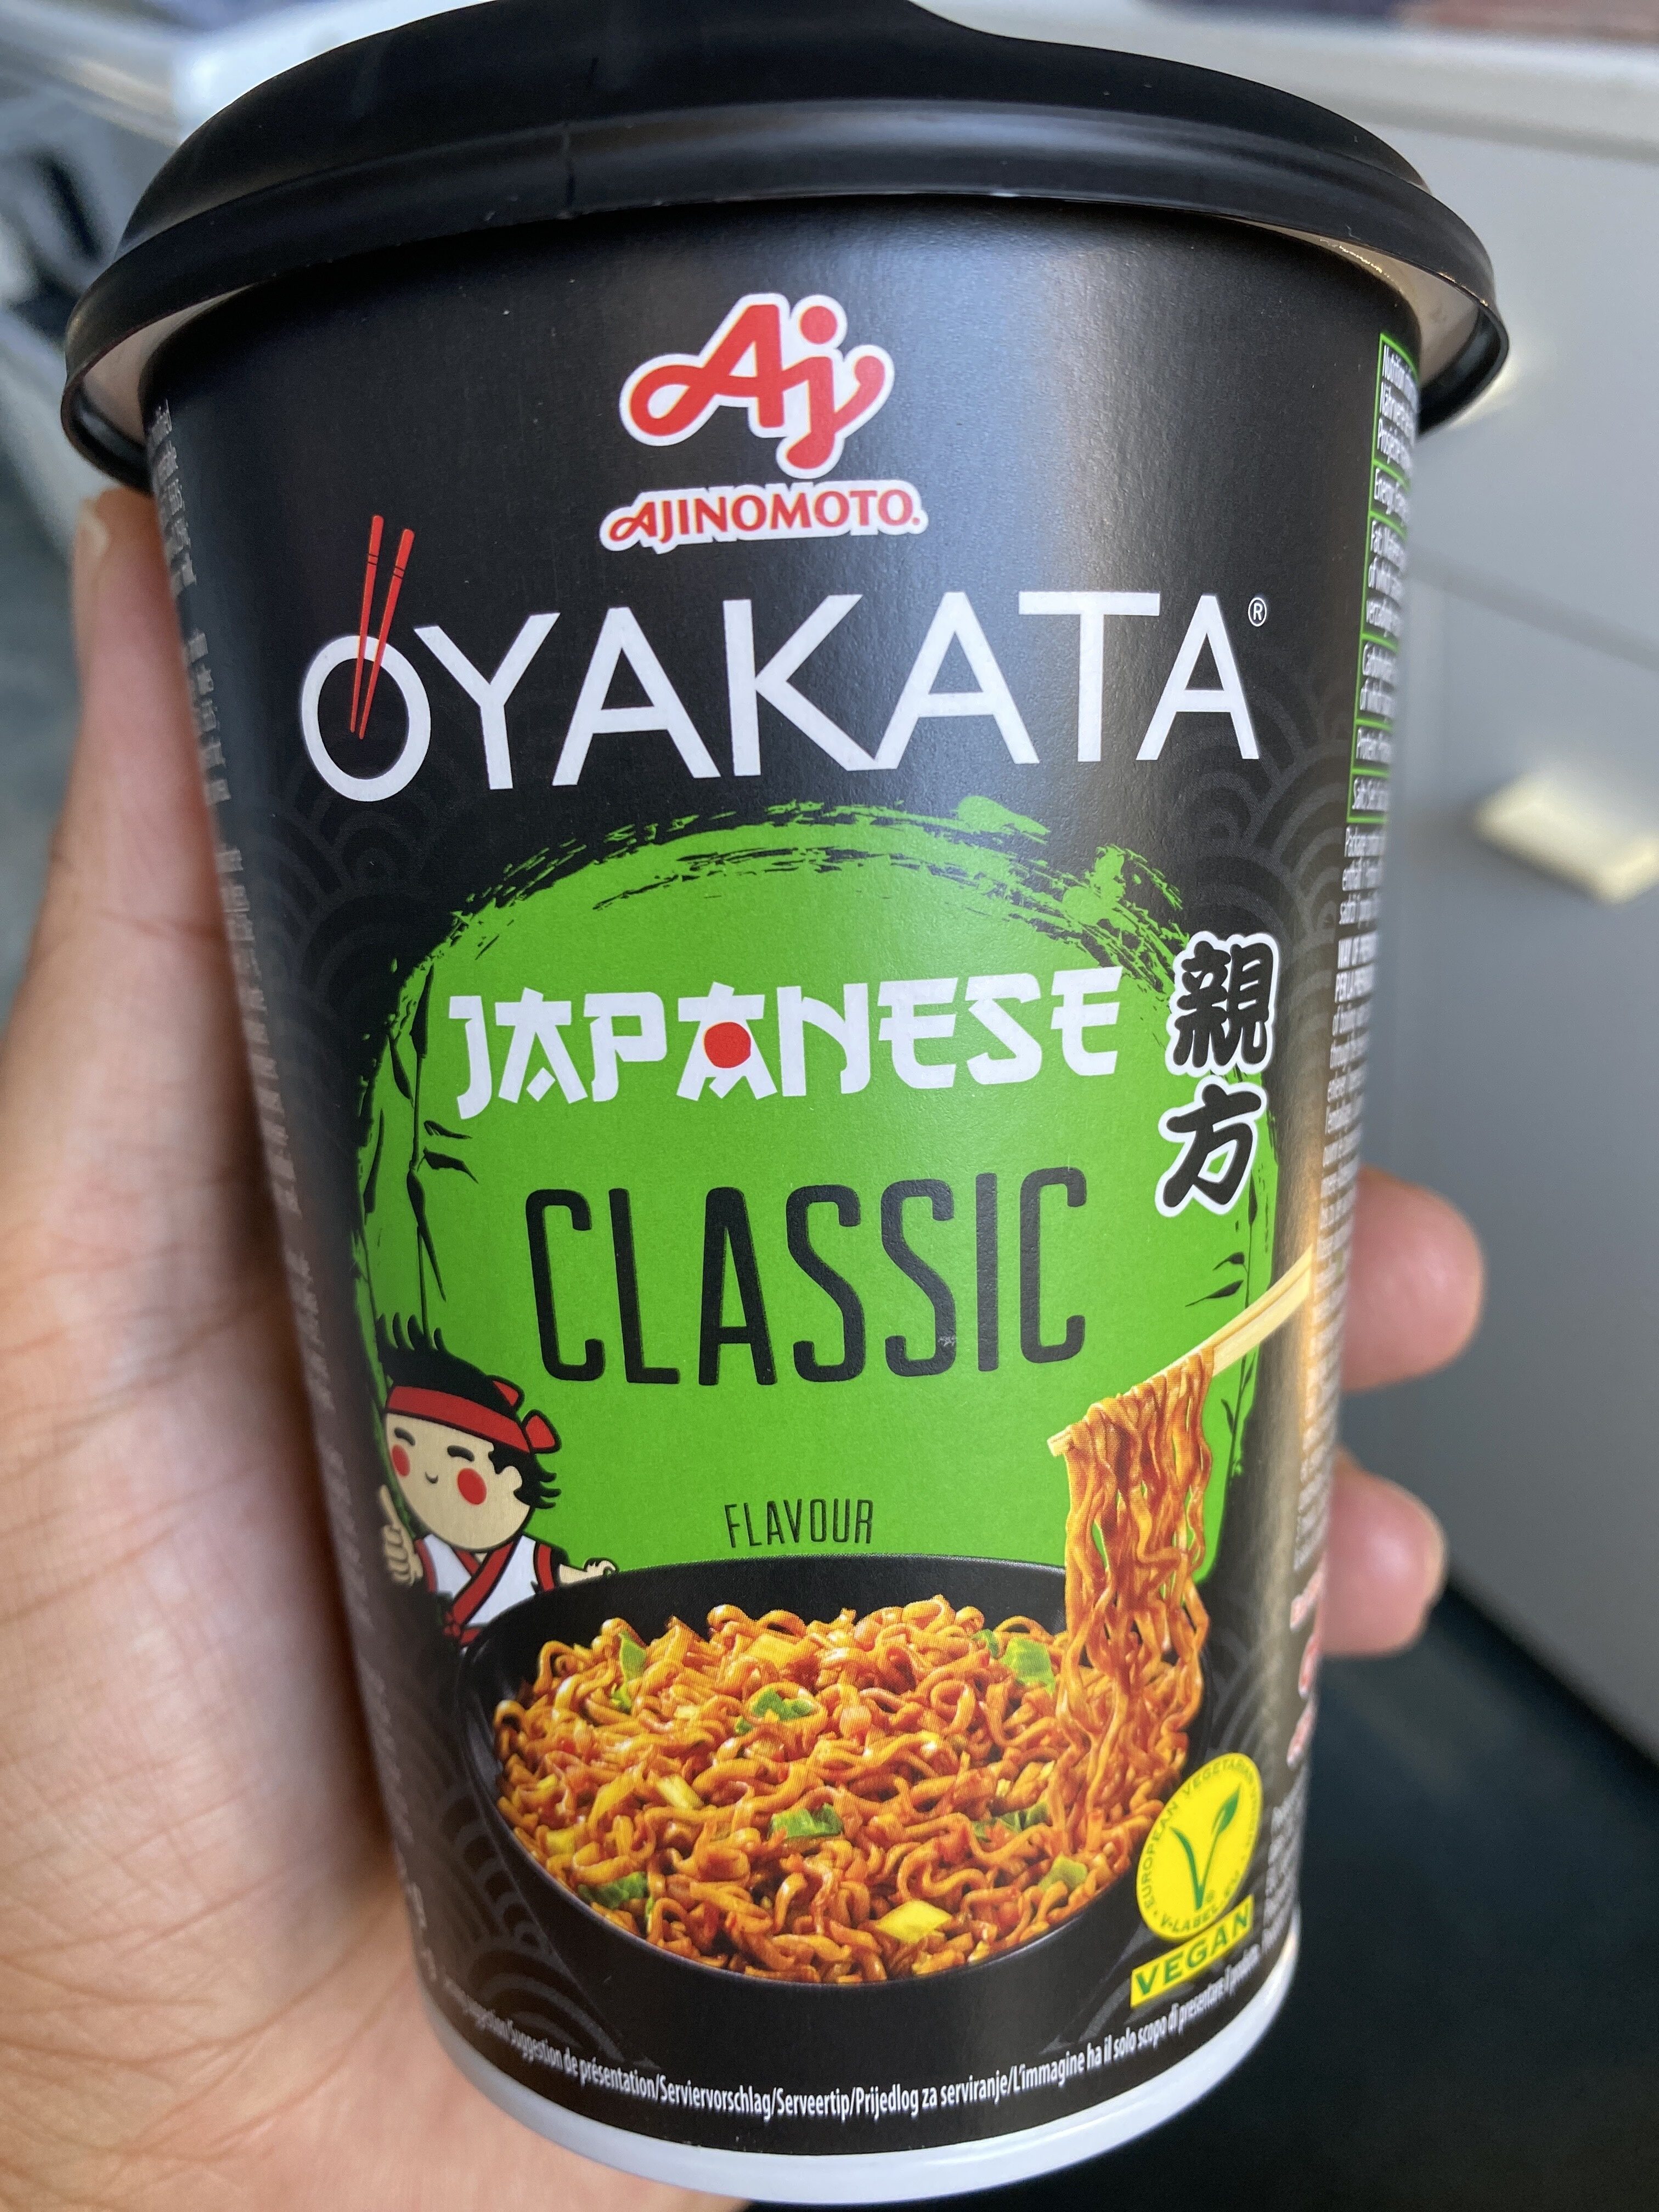 Oyakata Japanese Classic Noodle Dish Cup - Instruction de recyclage et/ou informations d'emballage